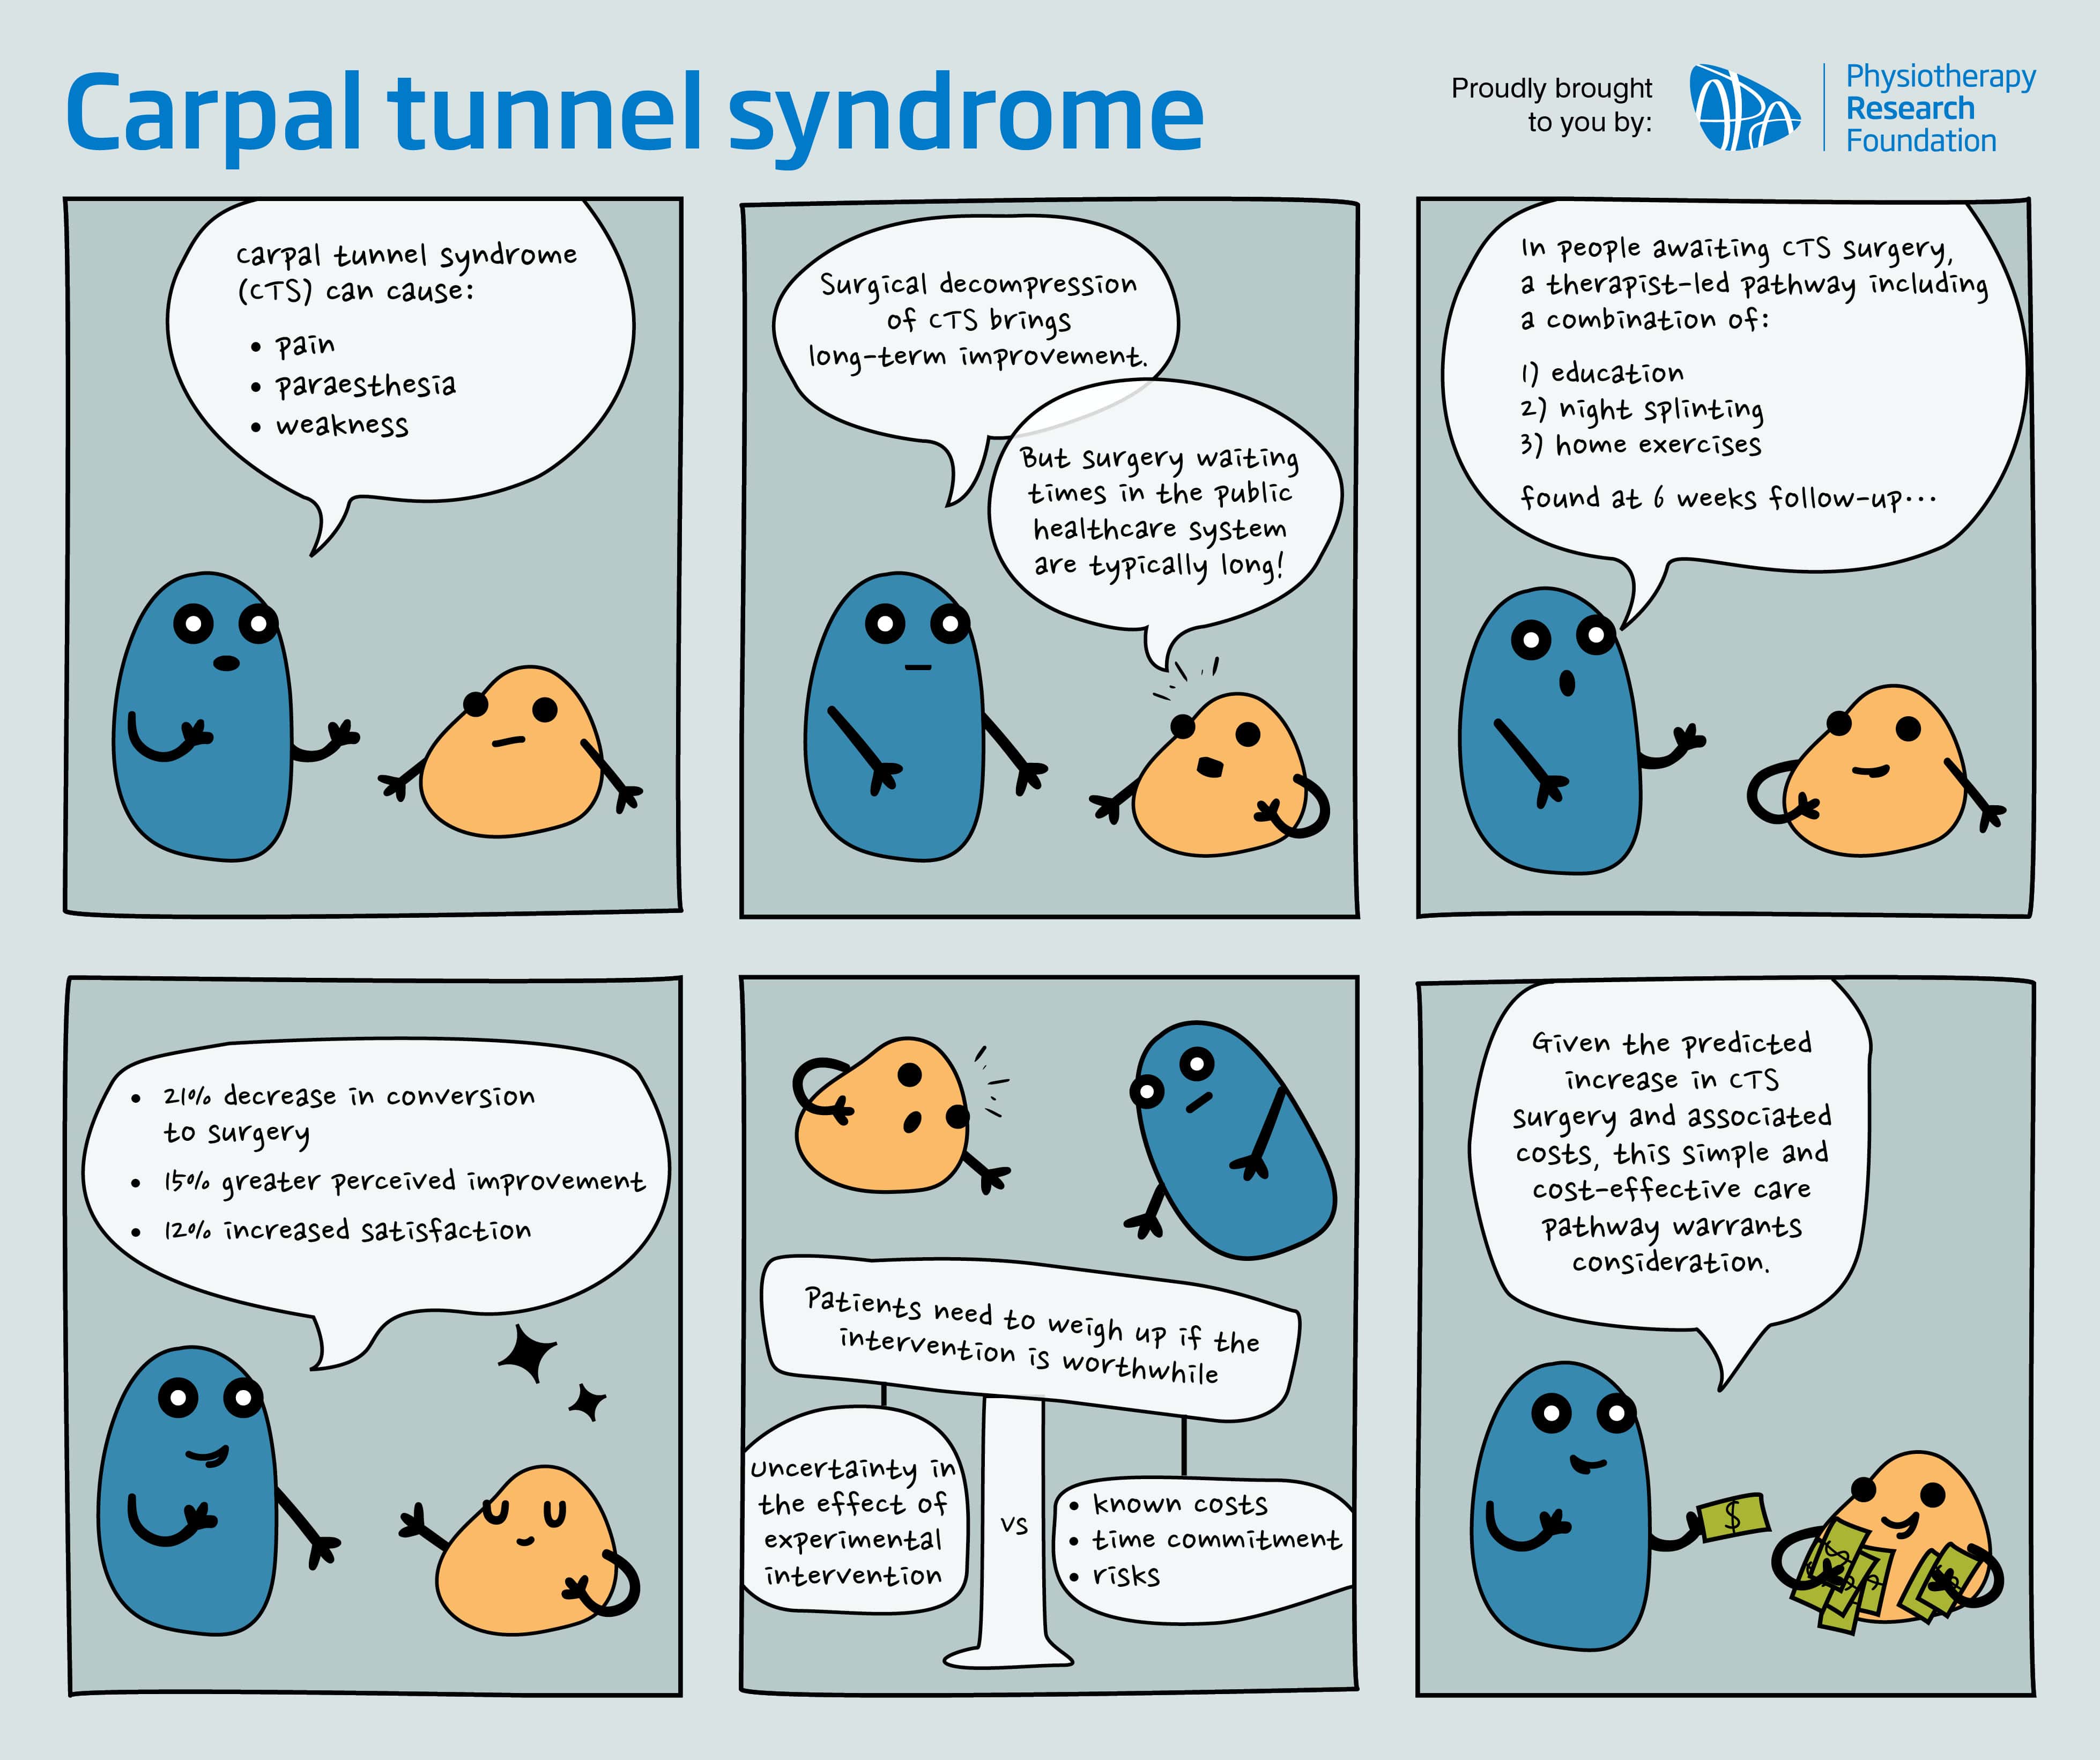 APA | Carpal tunnel syndrome